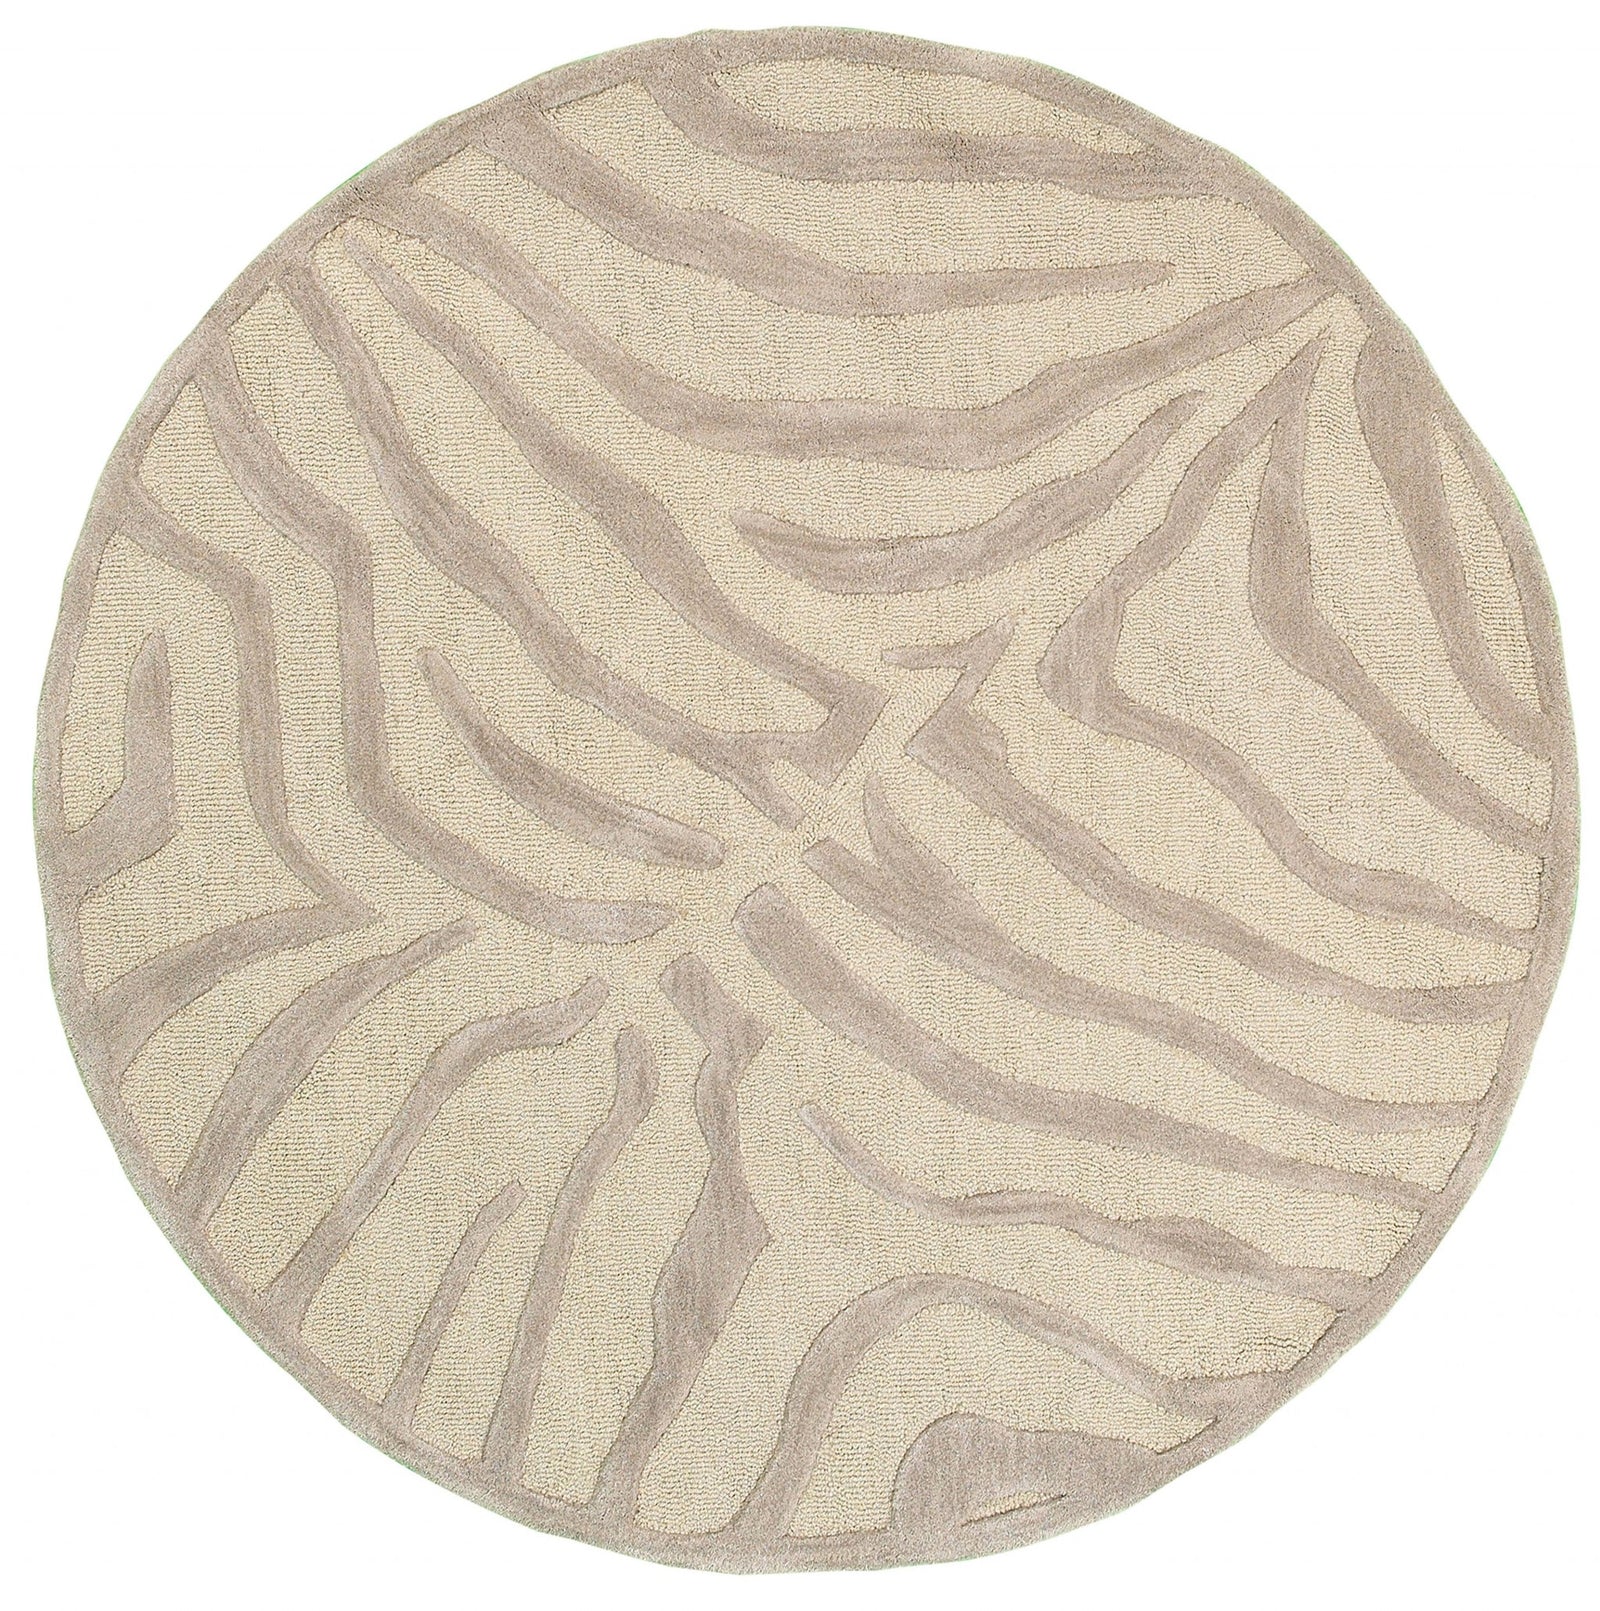 3’ Round Taupe Zebra Pattern Area Rug